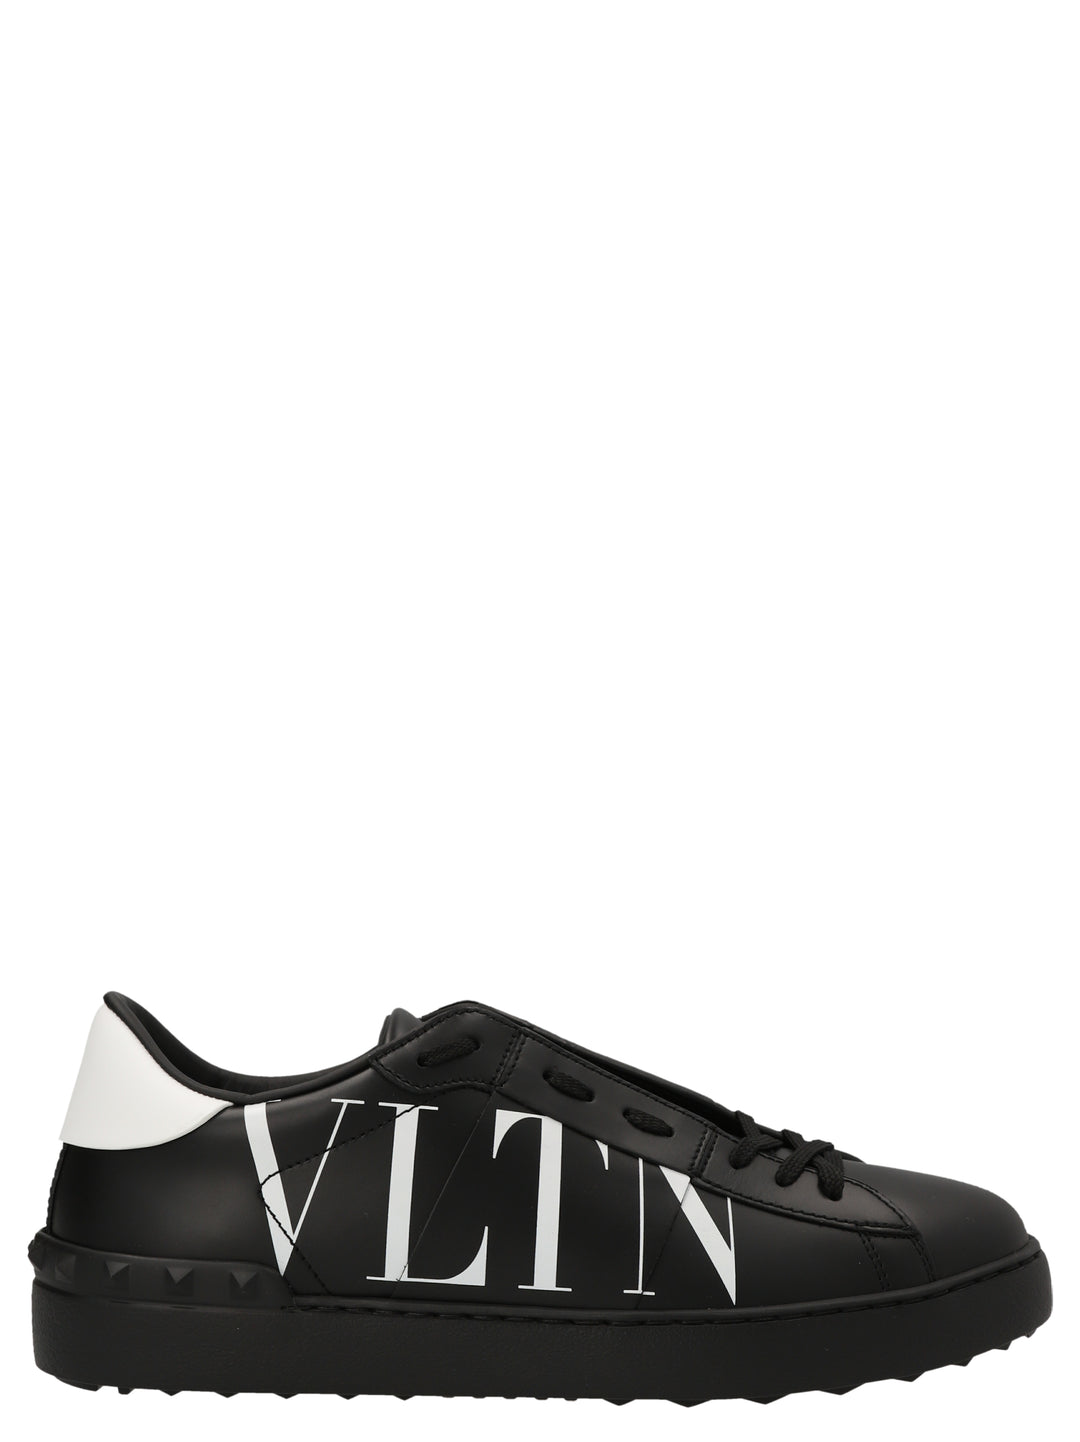 'VLTN' Sneakers Nero